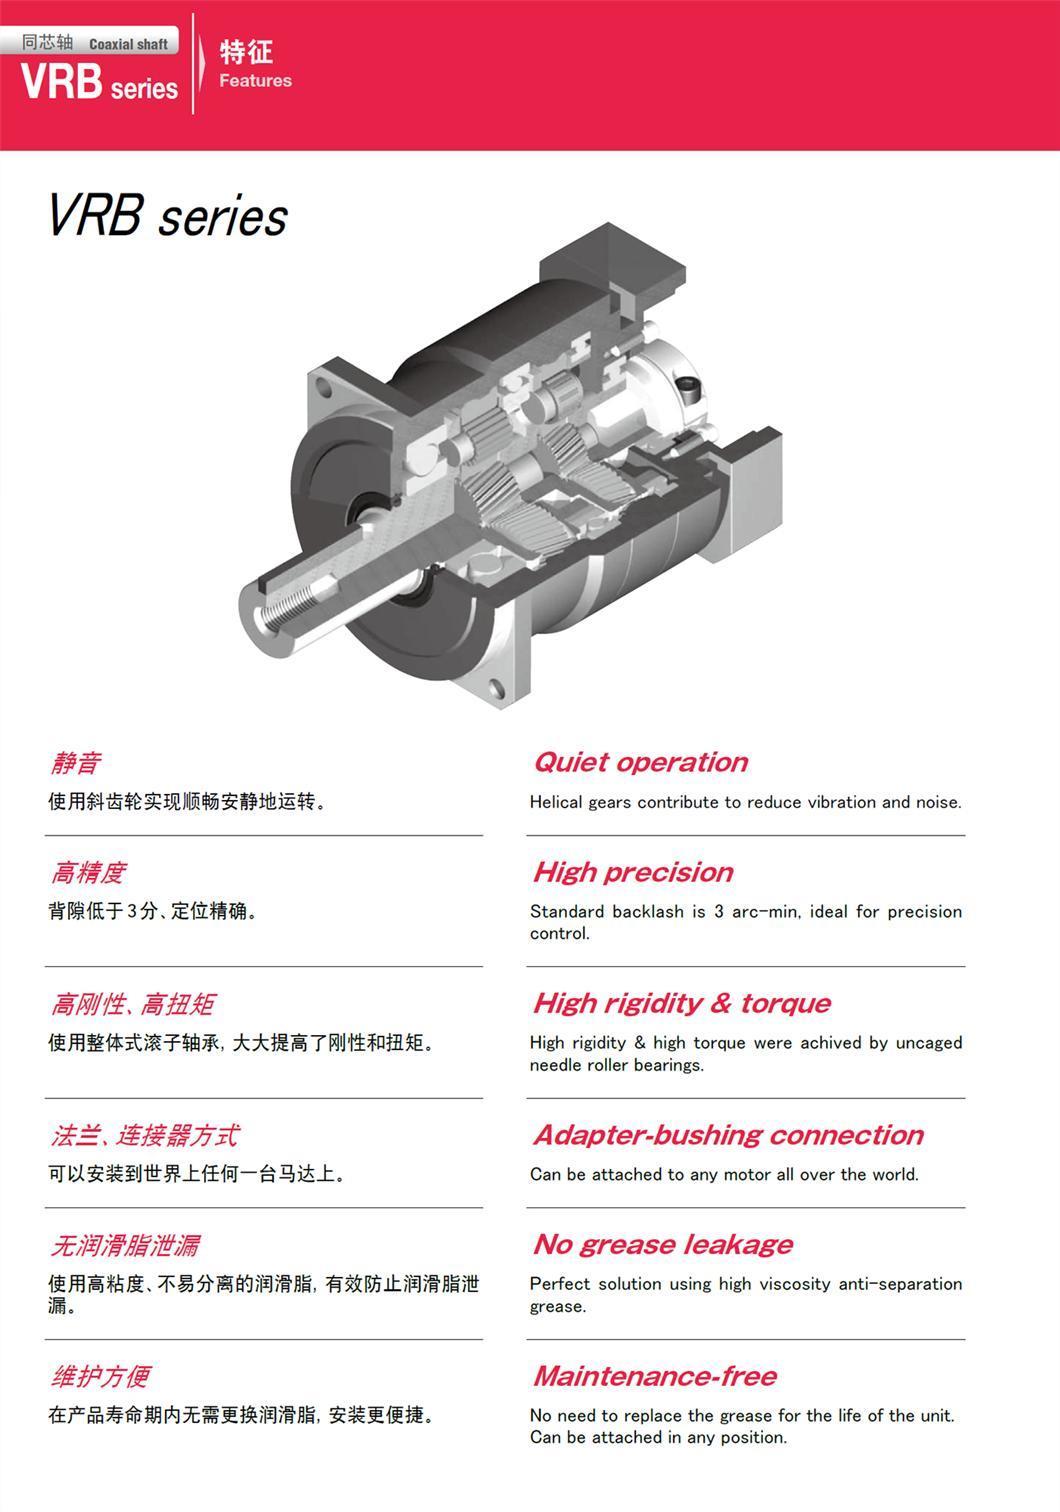 Shimpo Gearbox High-Precision Vrb-115c for Gantry Robot Servo Motor Reducer